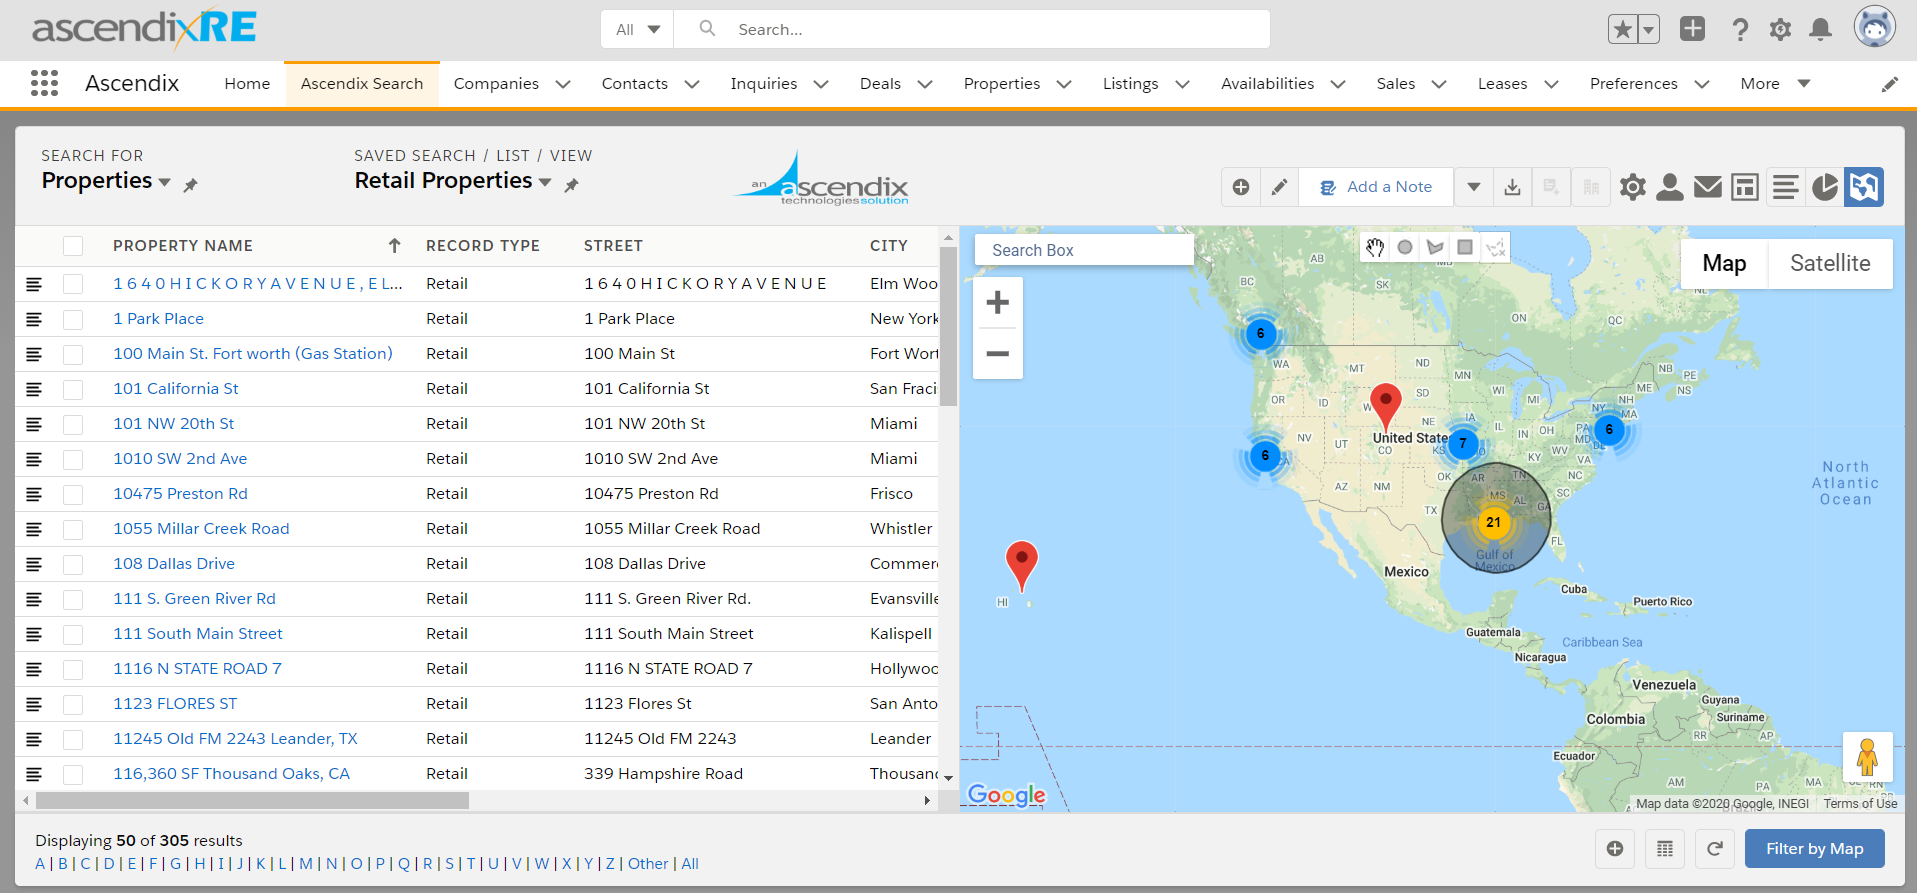 Ascendixre Advanced Property Search Using Map and multiple criteria